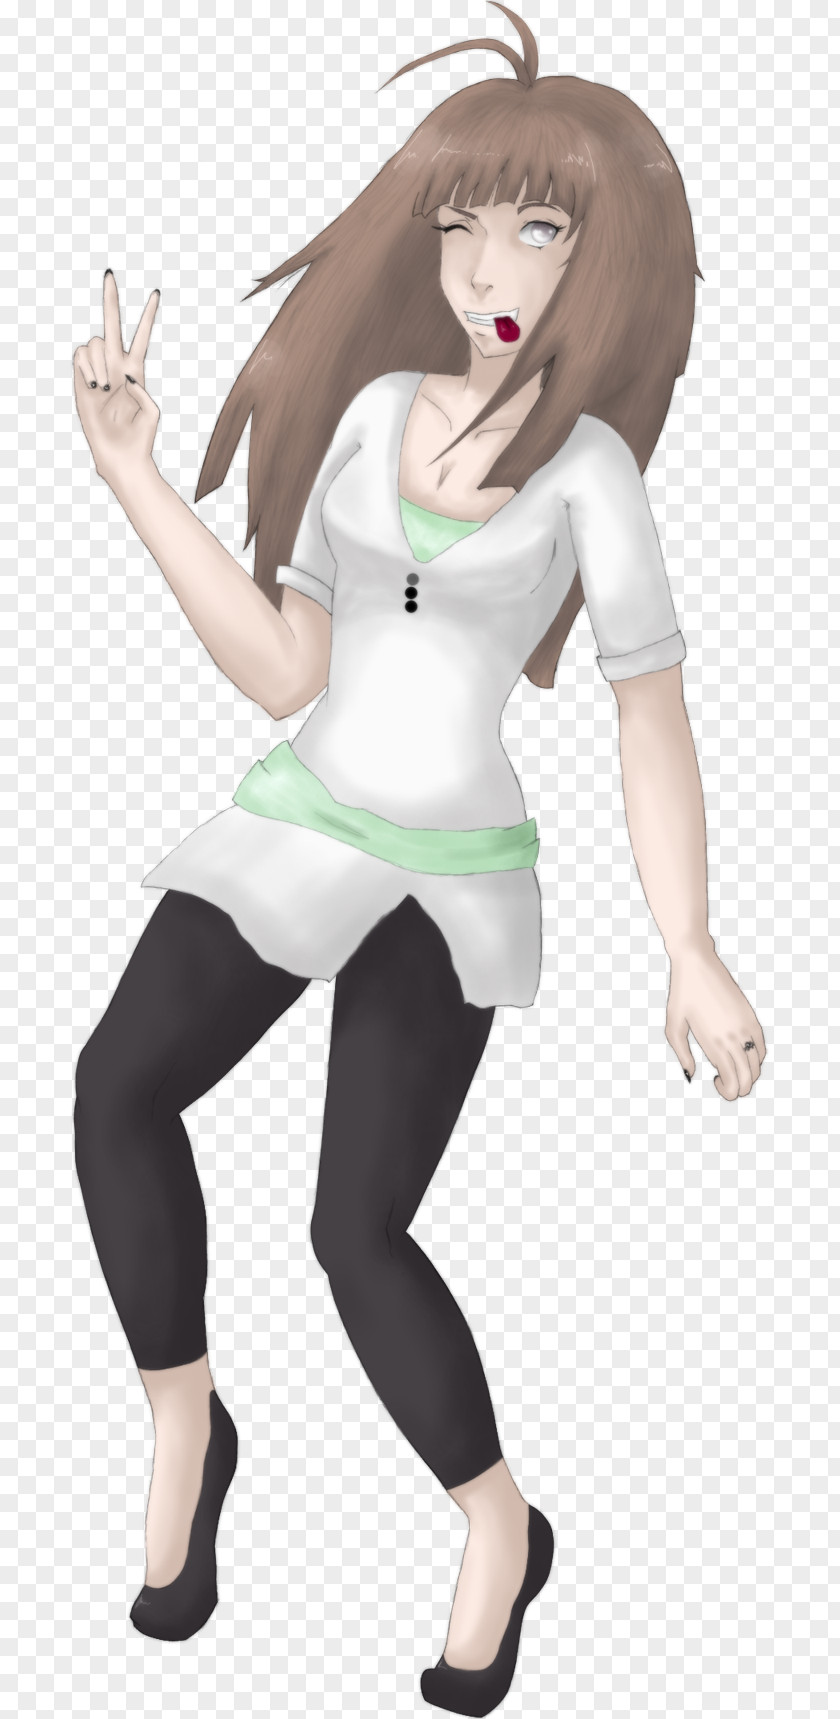 Rayne Shoulder Character Cartoon Figurine PNG